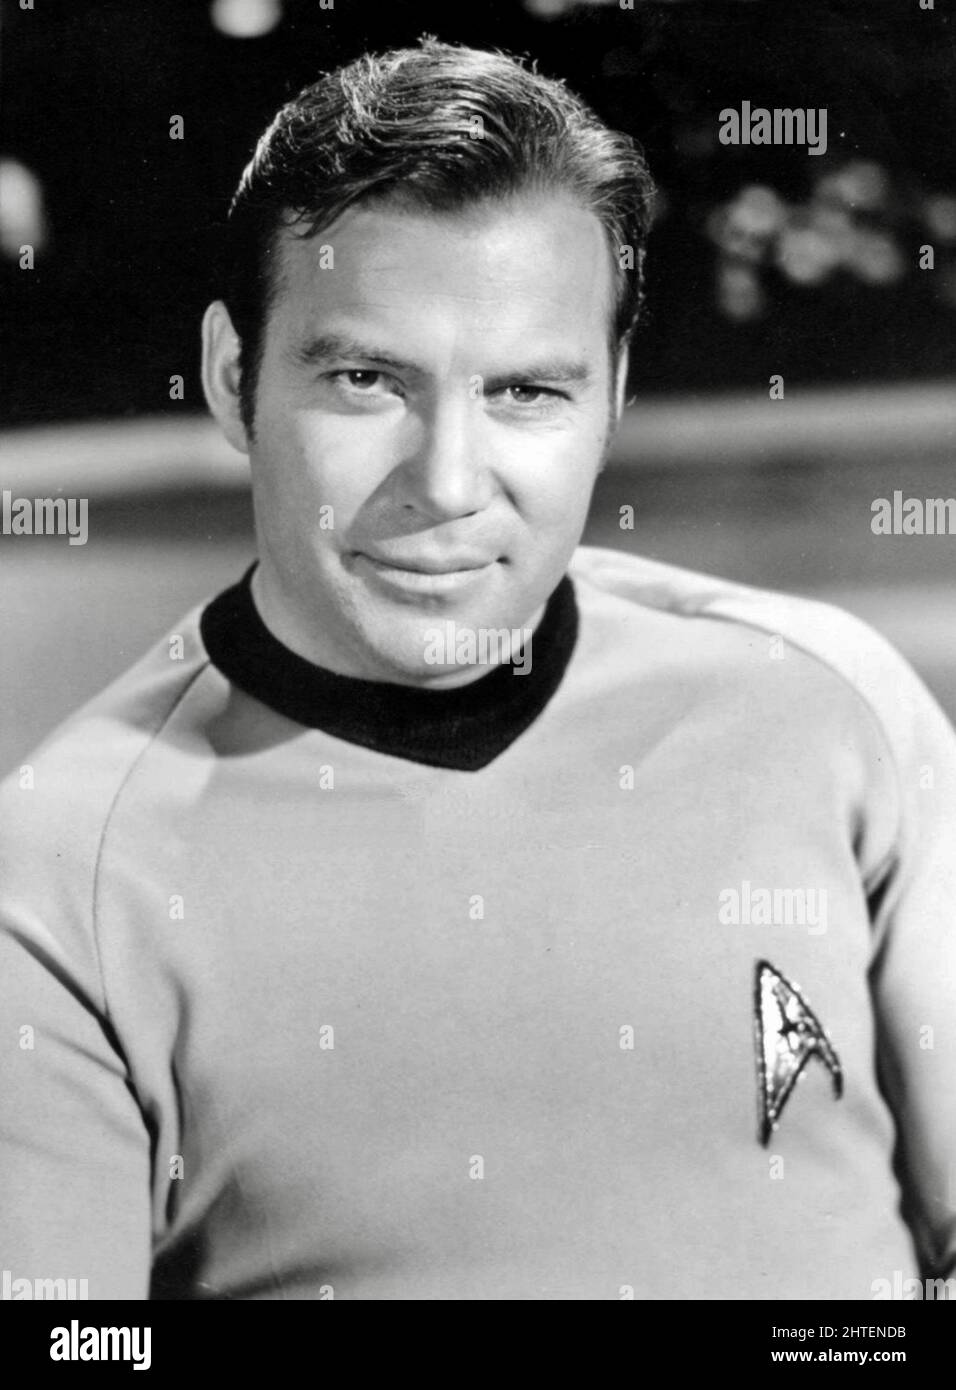 William Shatner come James Kirk dal programma televisivo Star Trek. Foto Stock